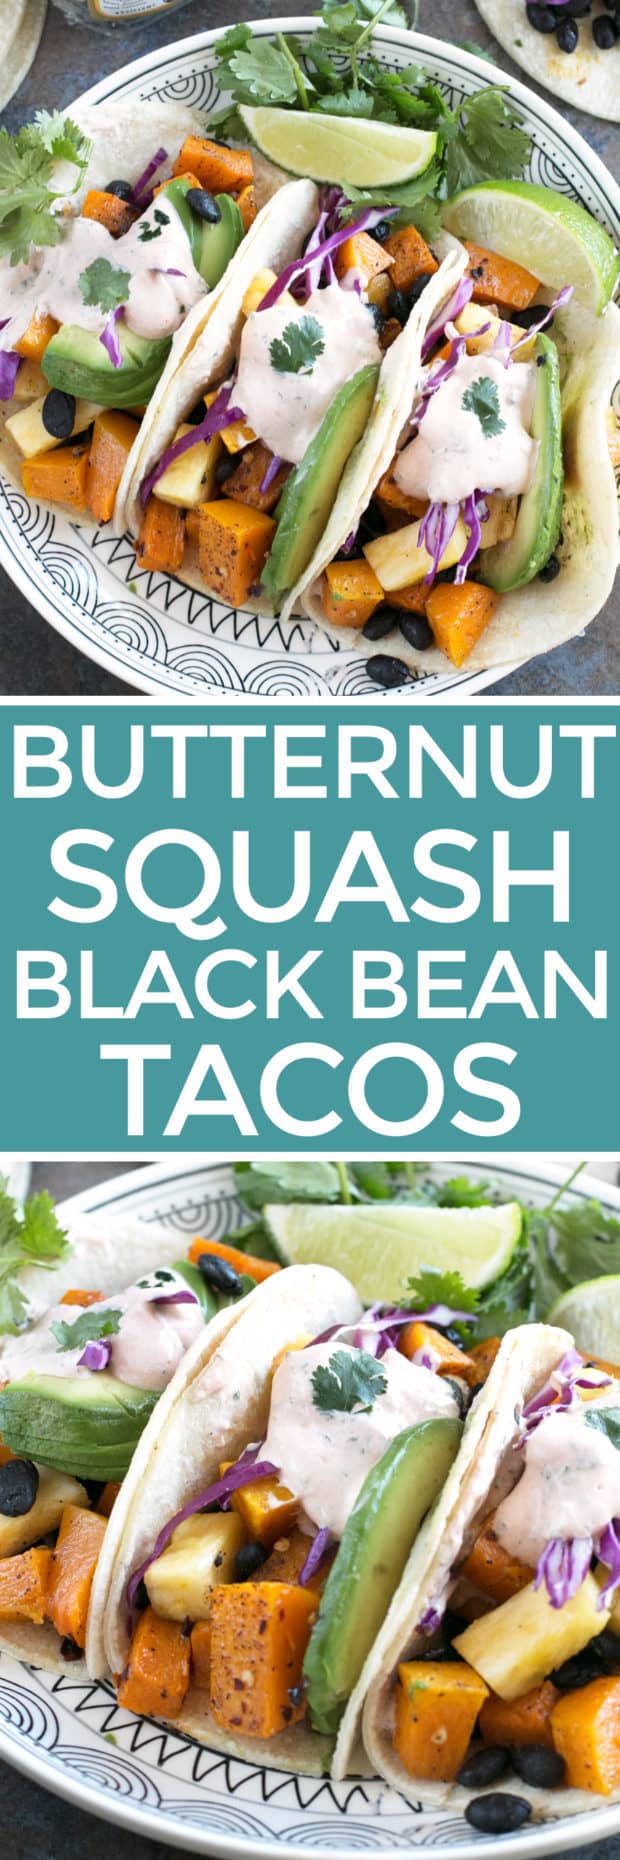 Roasted Butternut Squash Black Bean Tacos | cakenknife.com #vegetarian #healthy #tacotuesday #sponsored